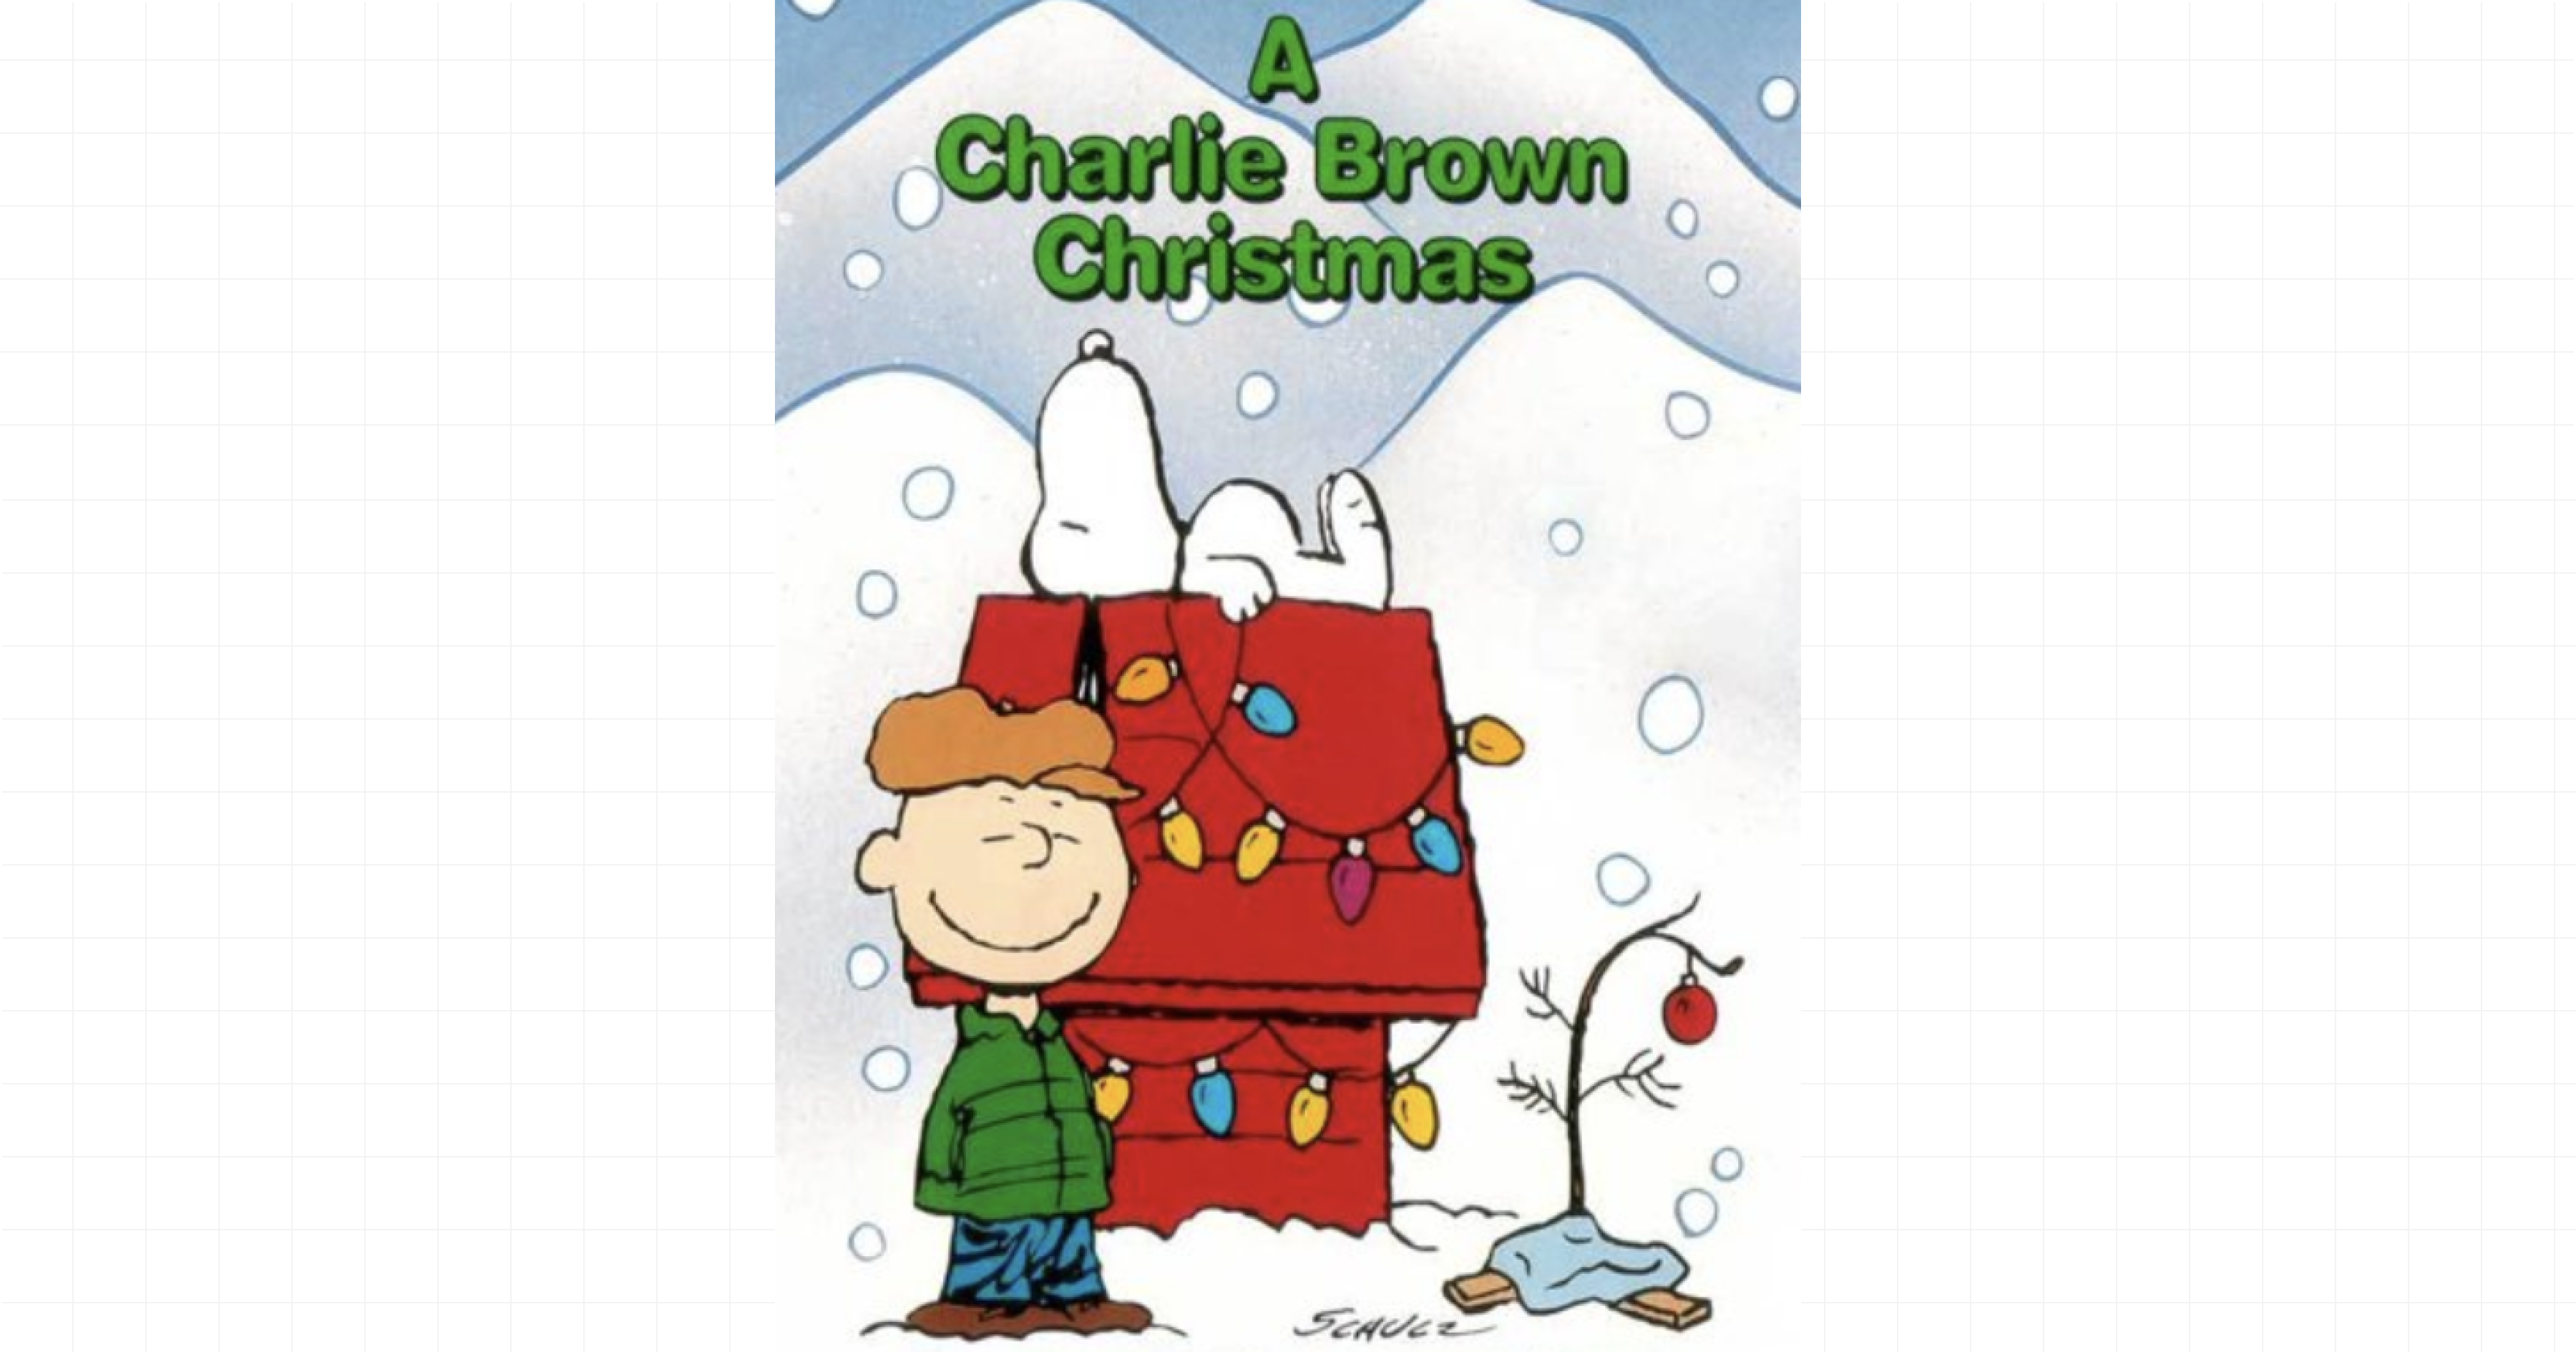 A Charlie Brown Christmas movie poster